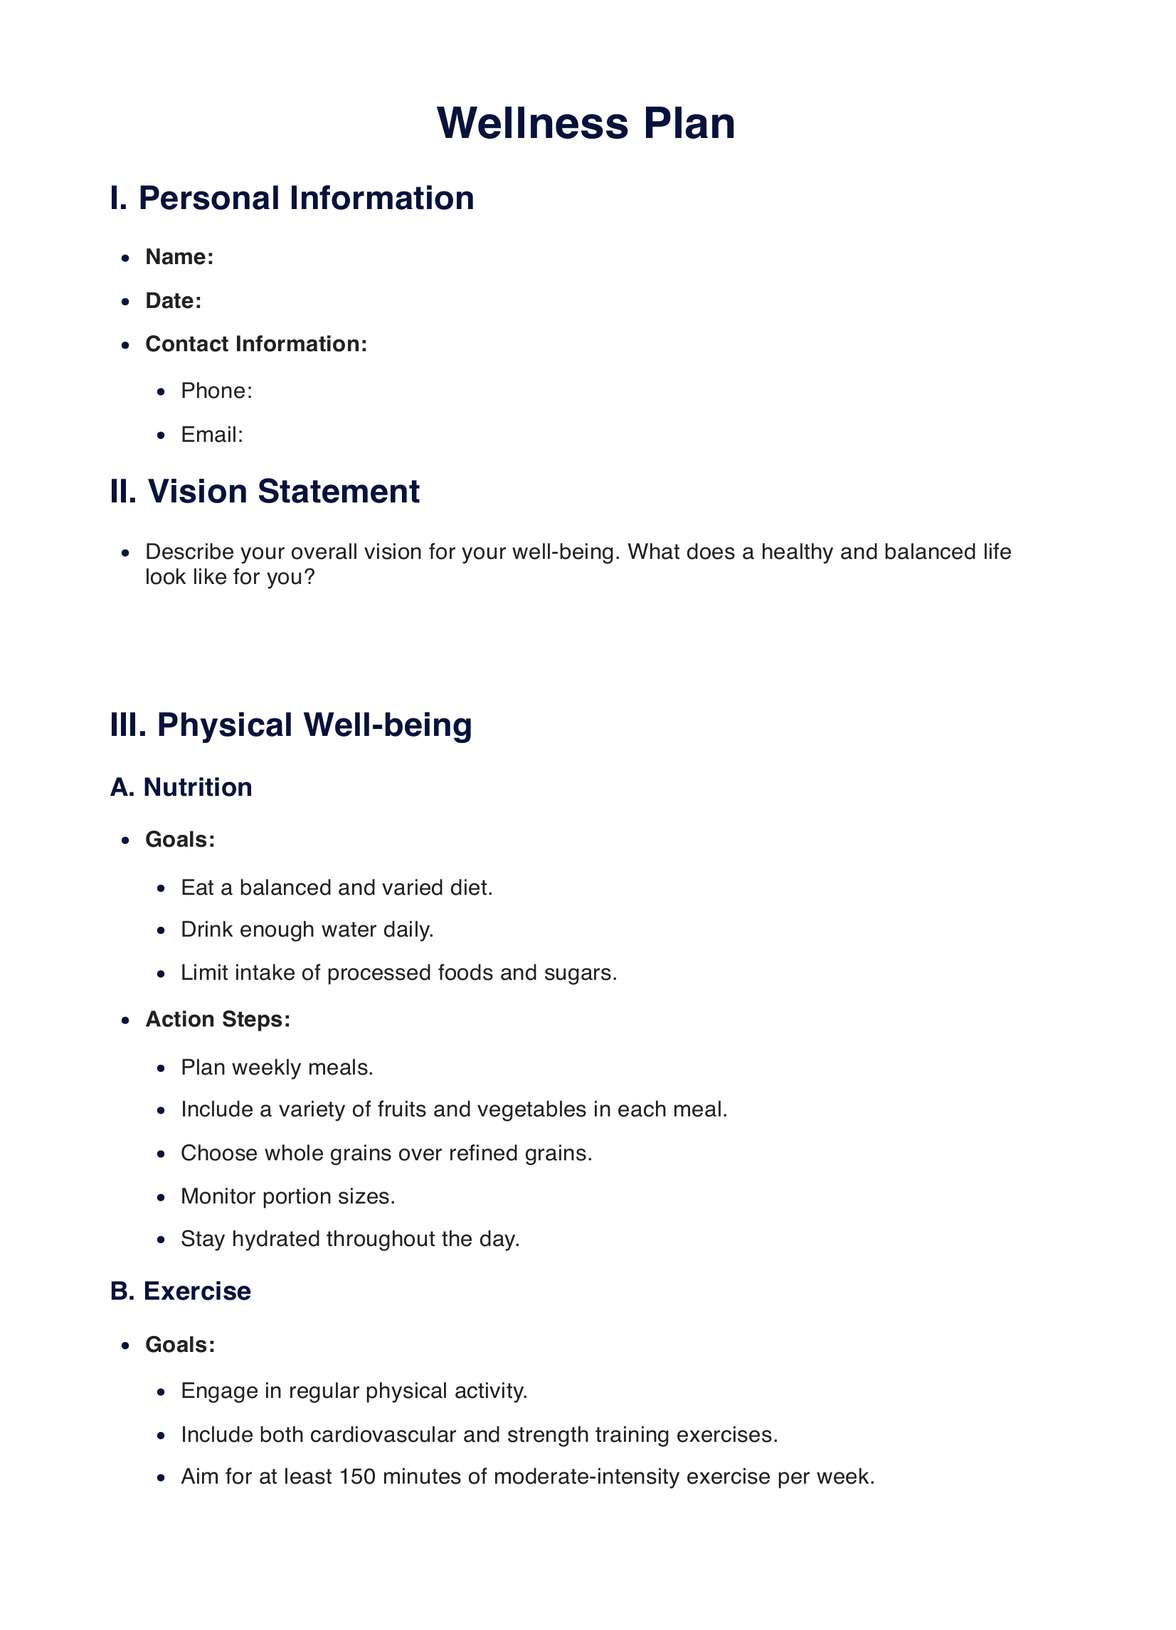 Wellness Plan PDF Example